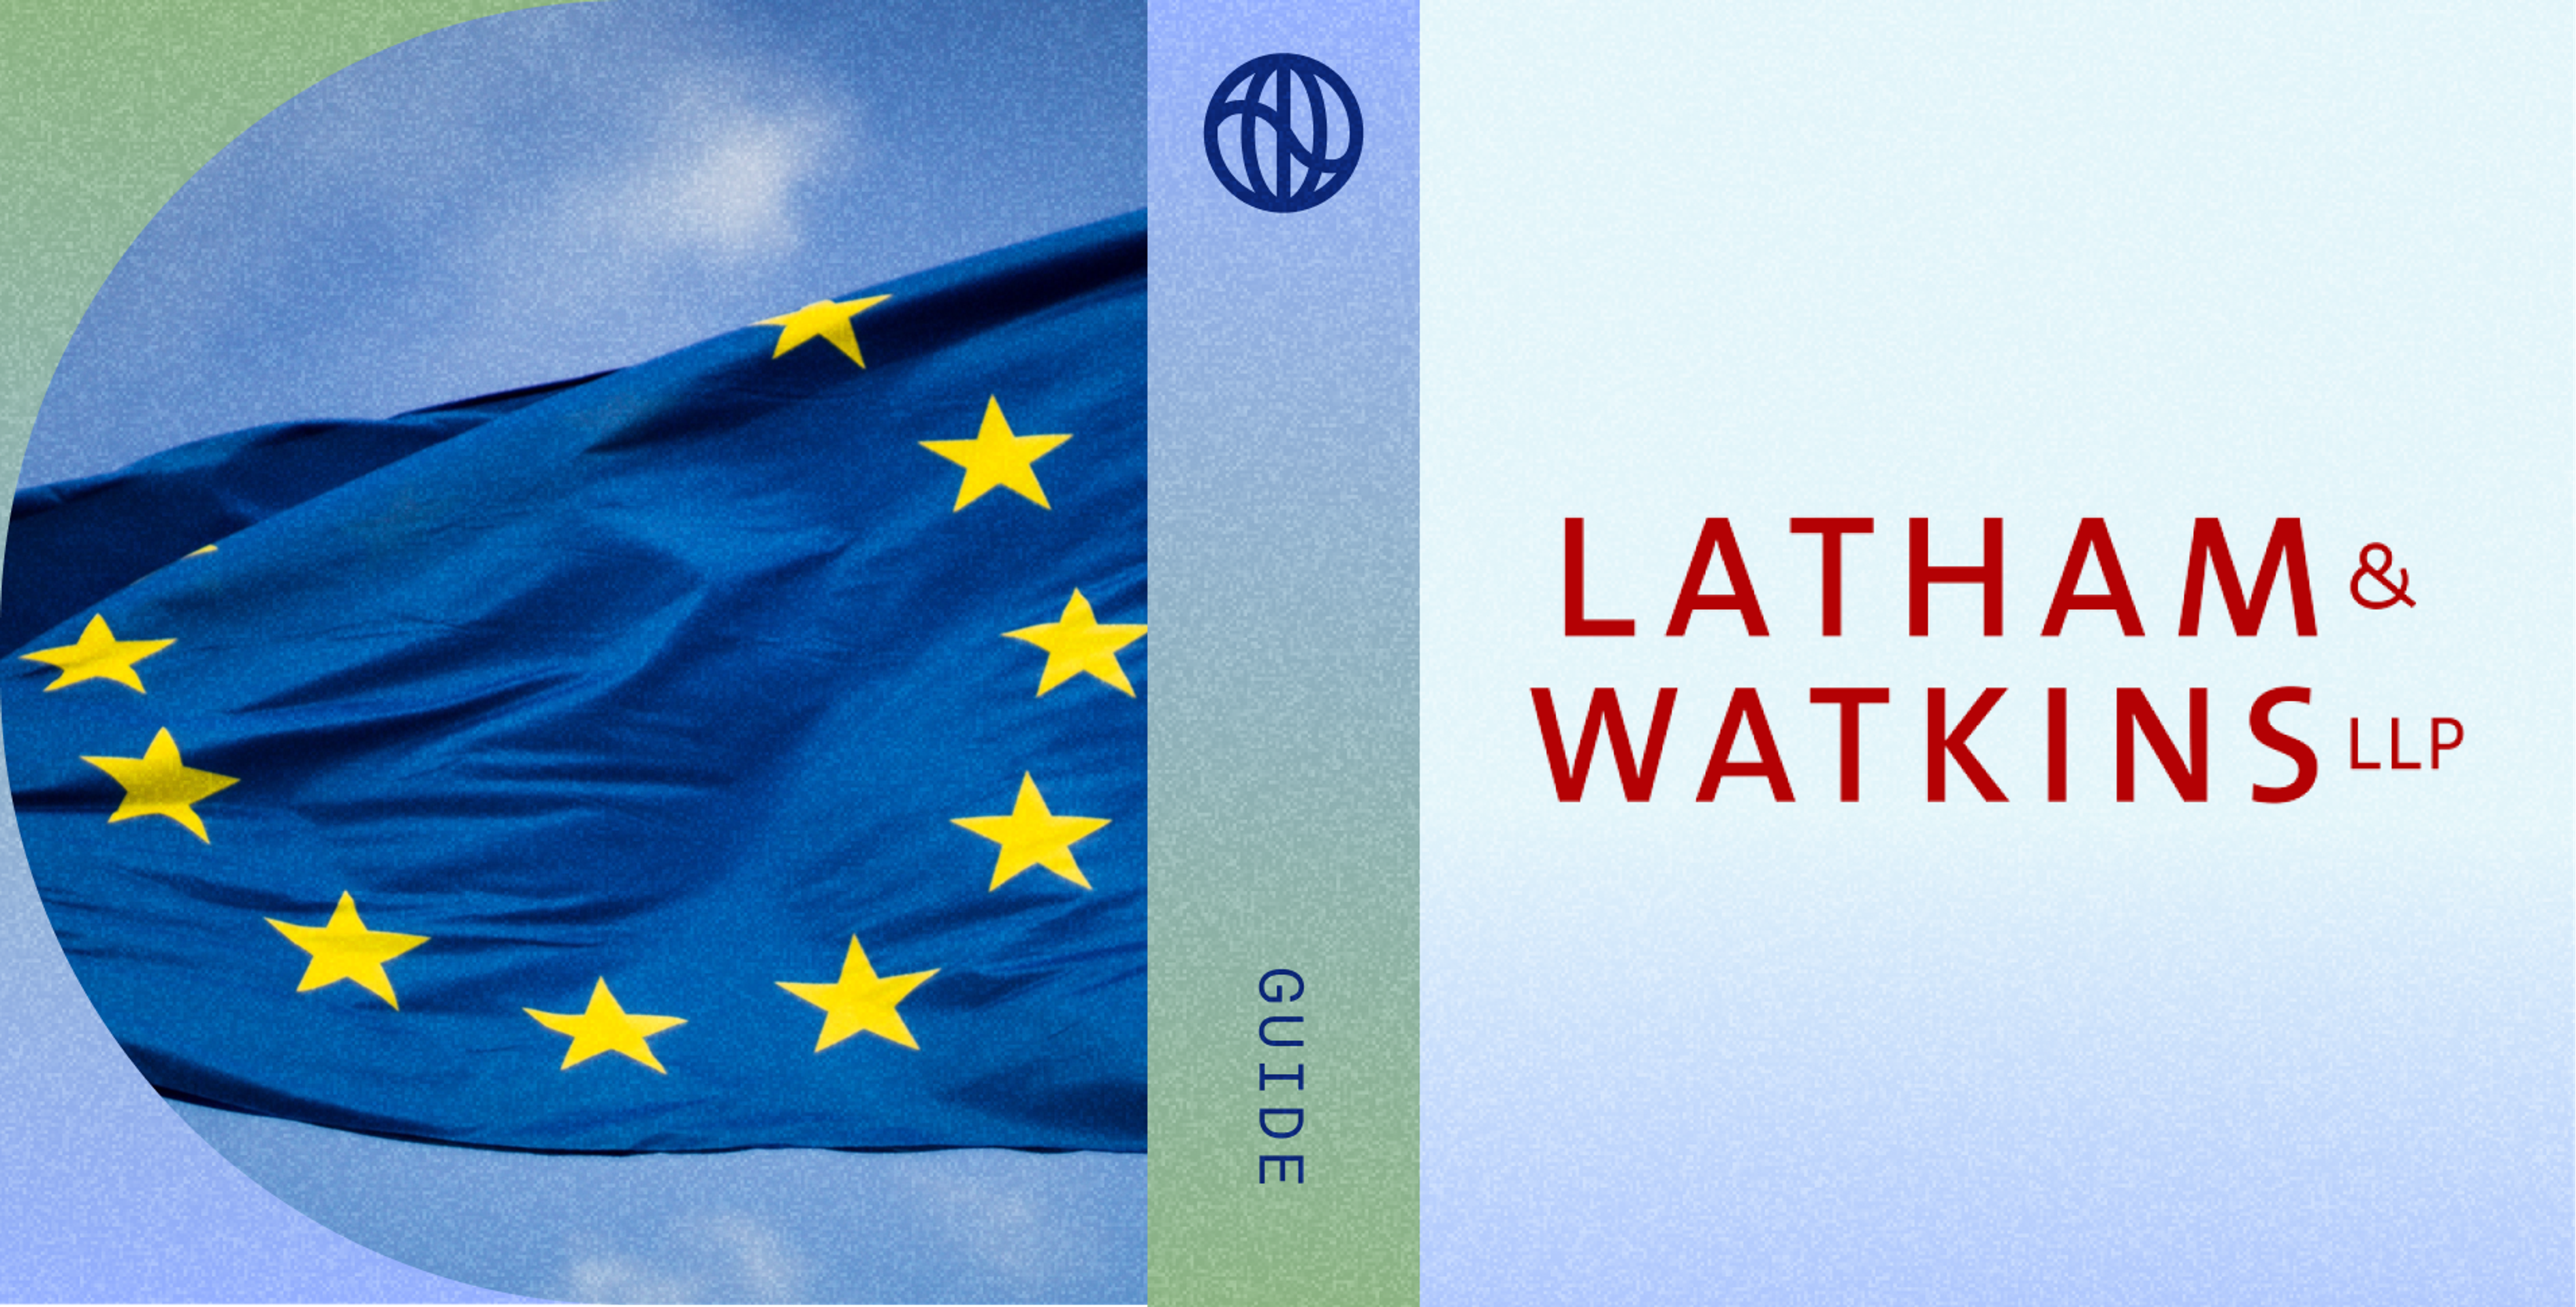 Latham & Watkins logo and EU flag on CS3d requirements